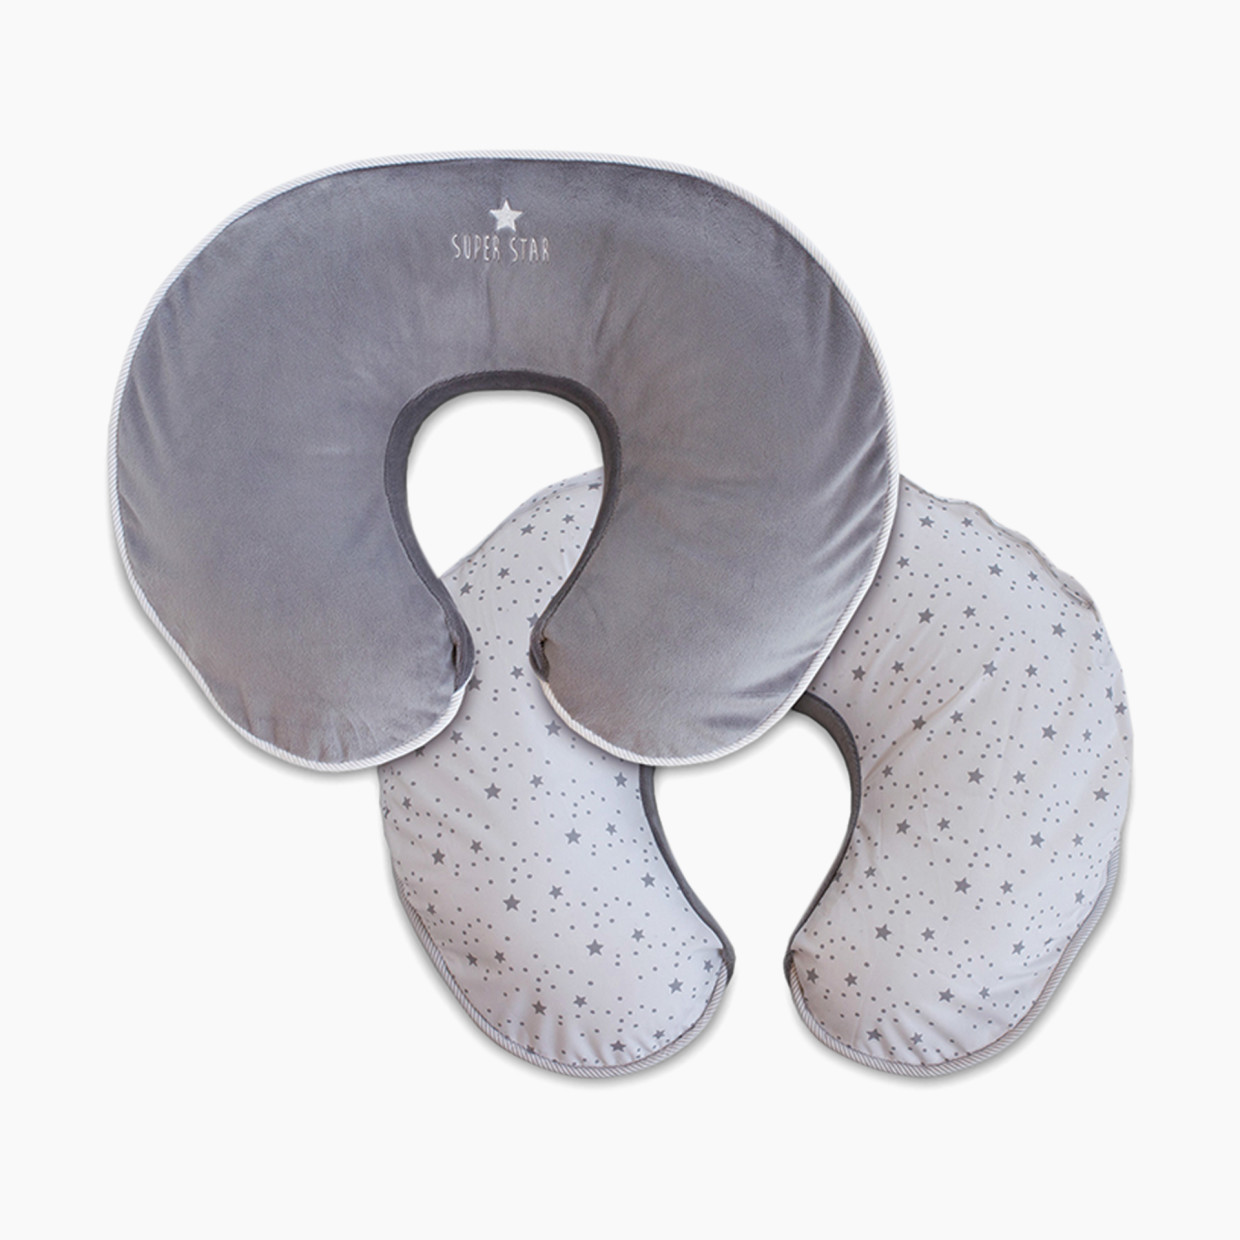 Boppy Premium Nursing Support Pillow Cover - Superstar Grey.